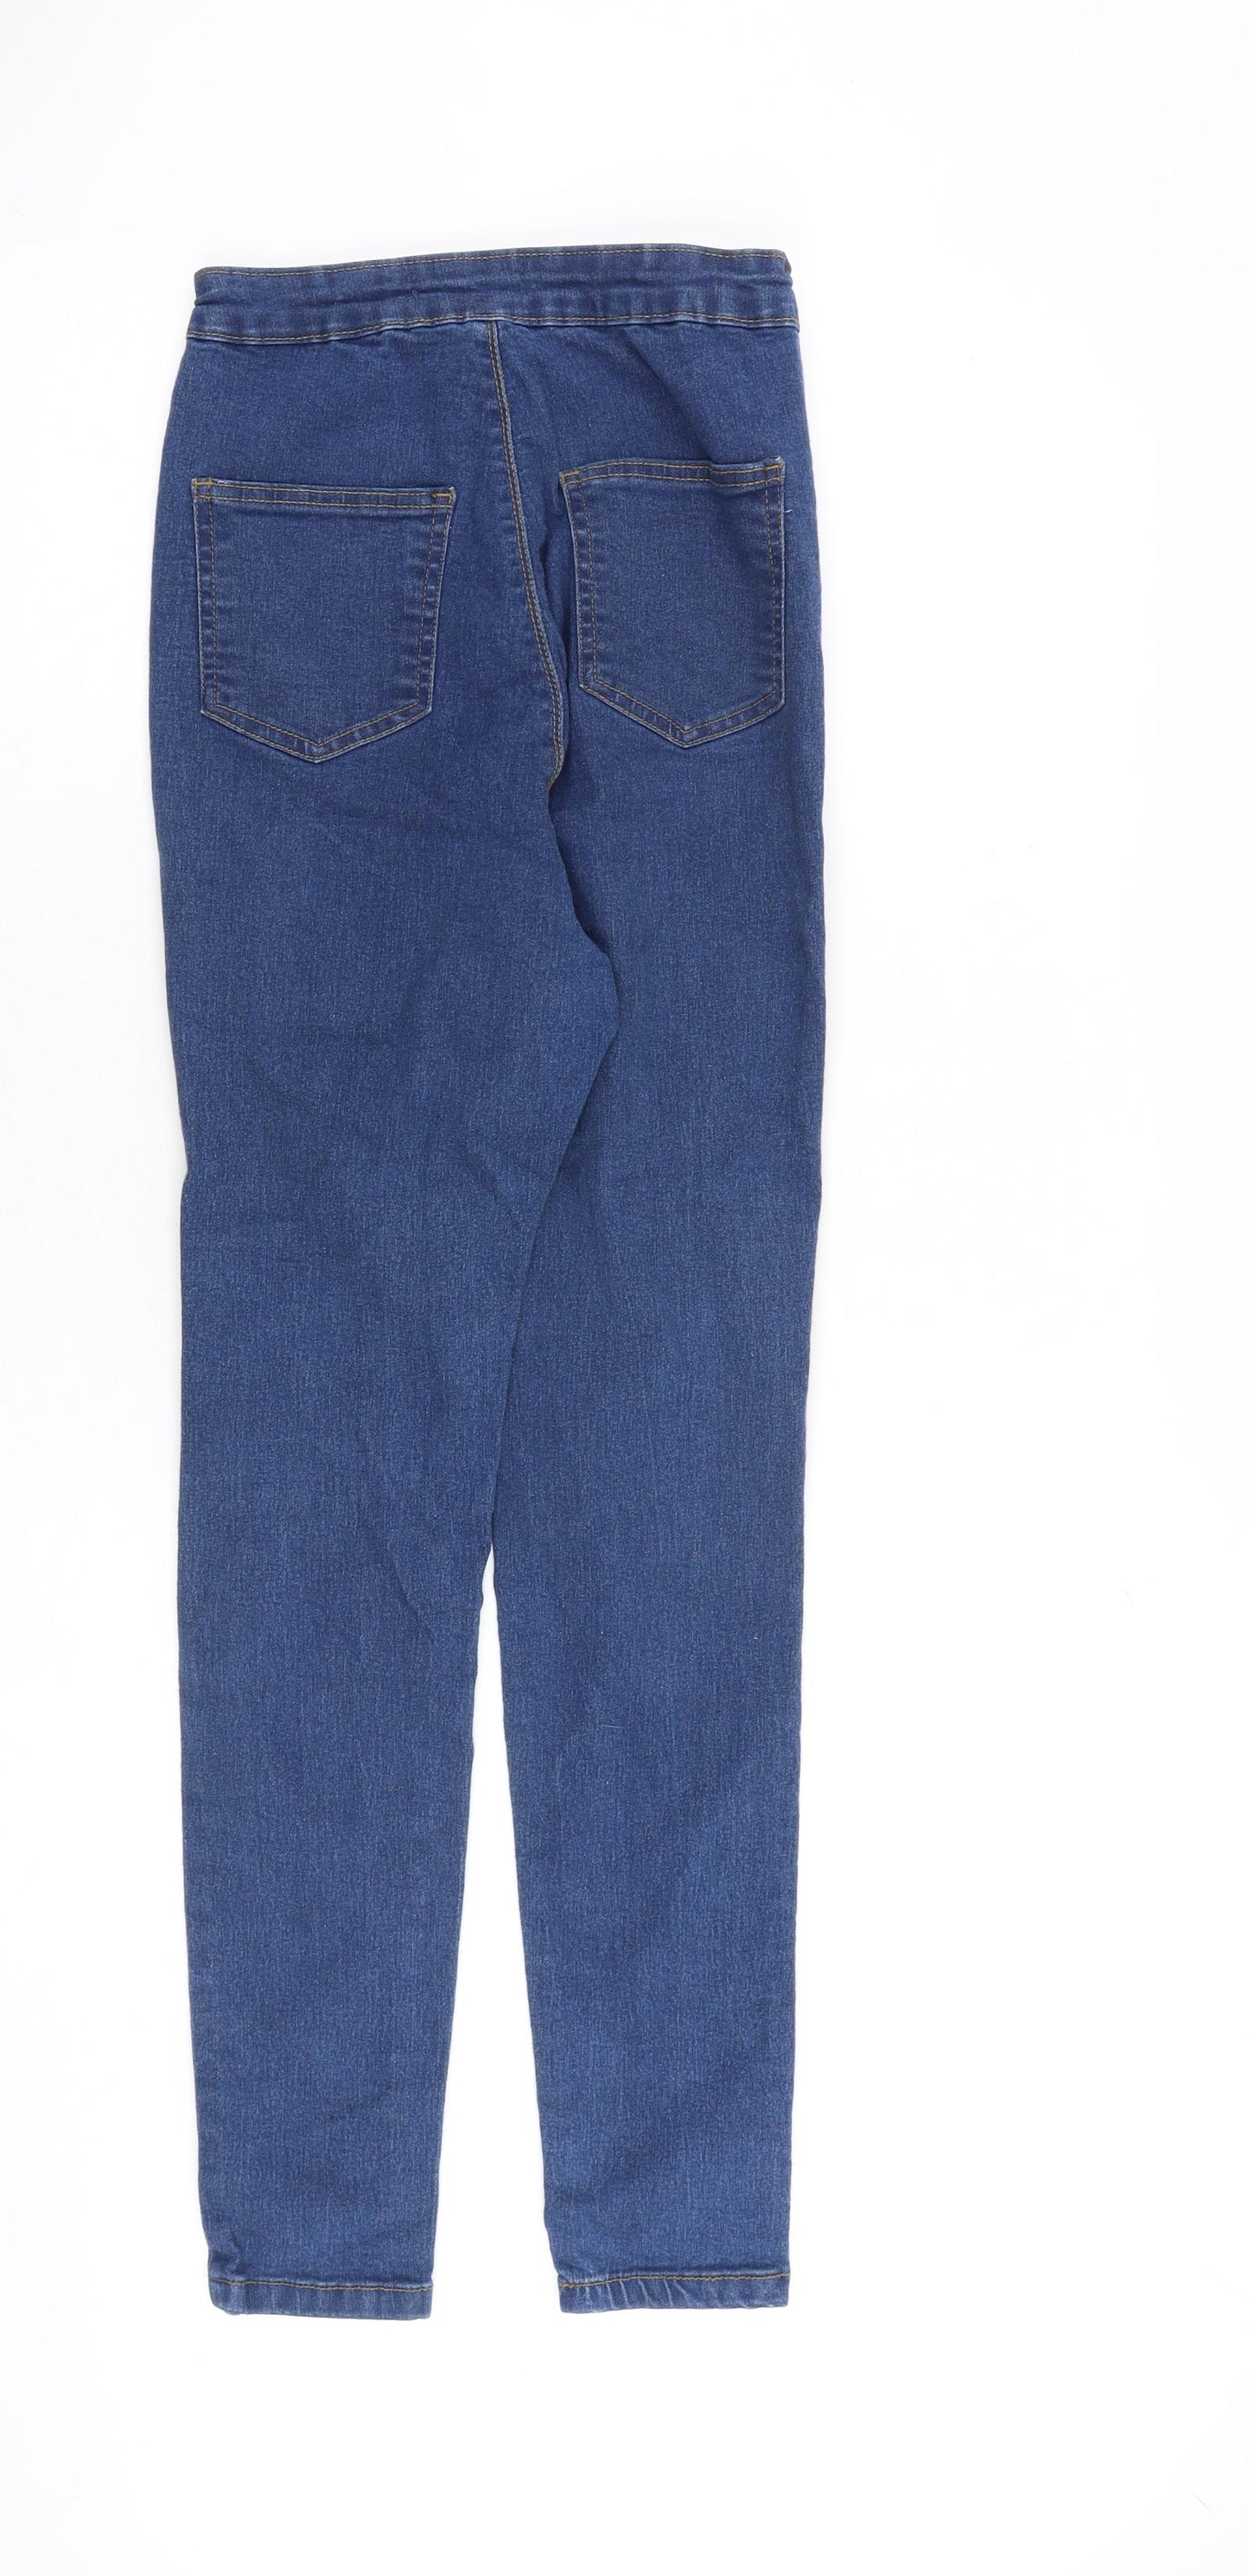 PRETTYLITTLETHING Womens Blue Cotton Skinny Jeans Size 10 Slim Zip